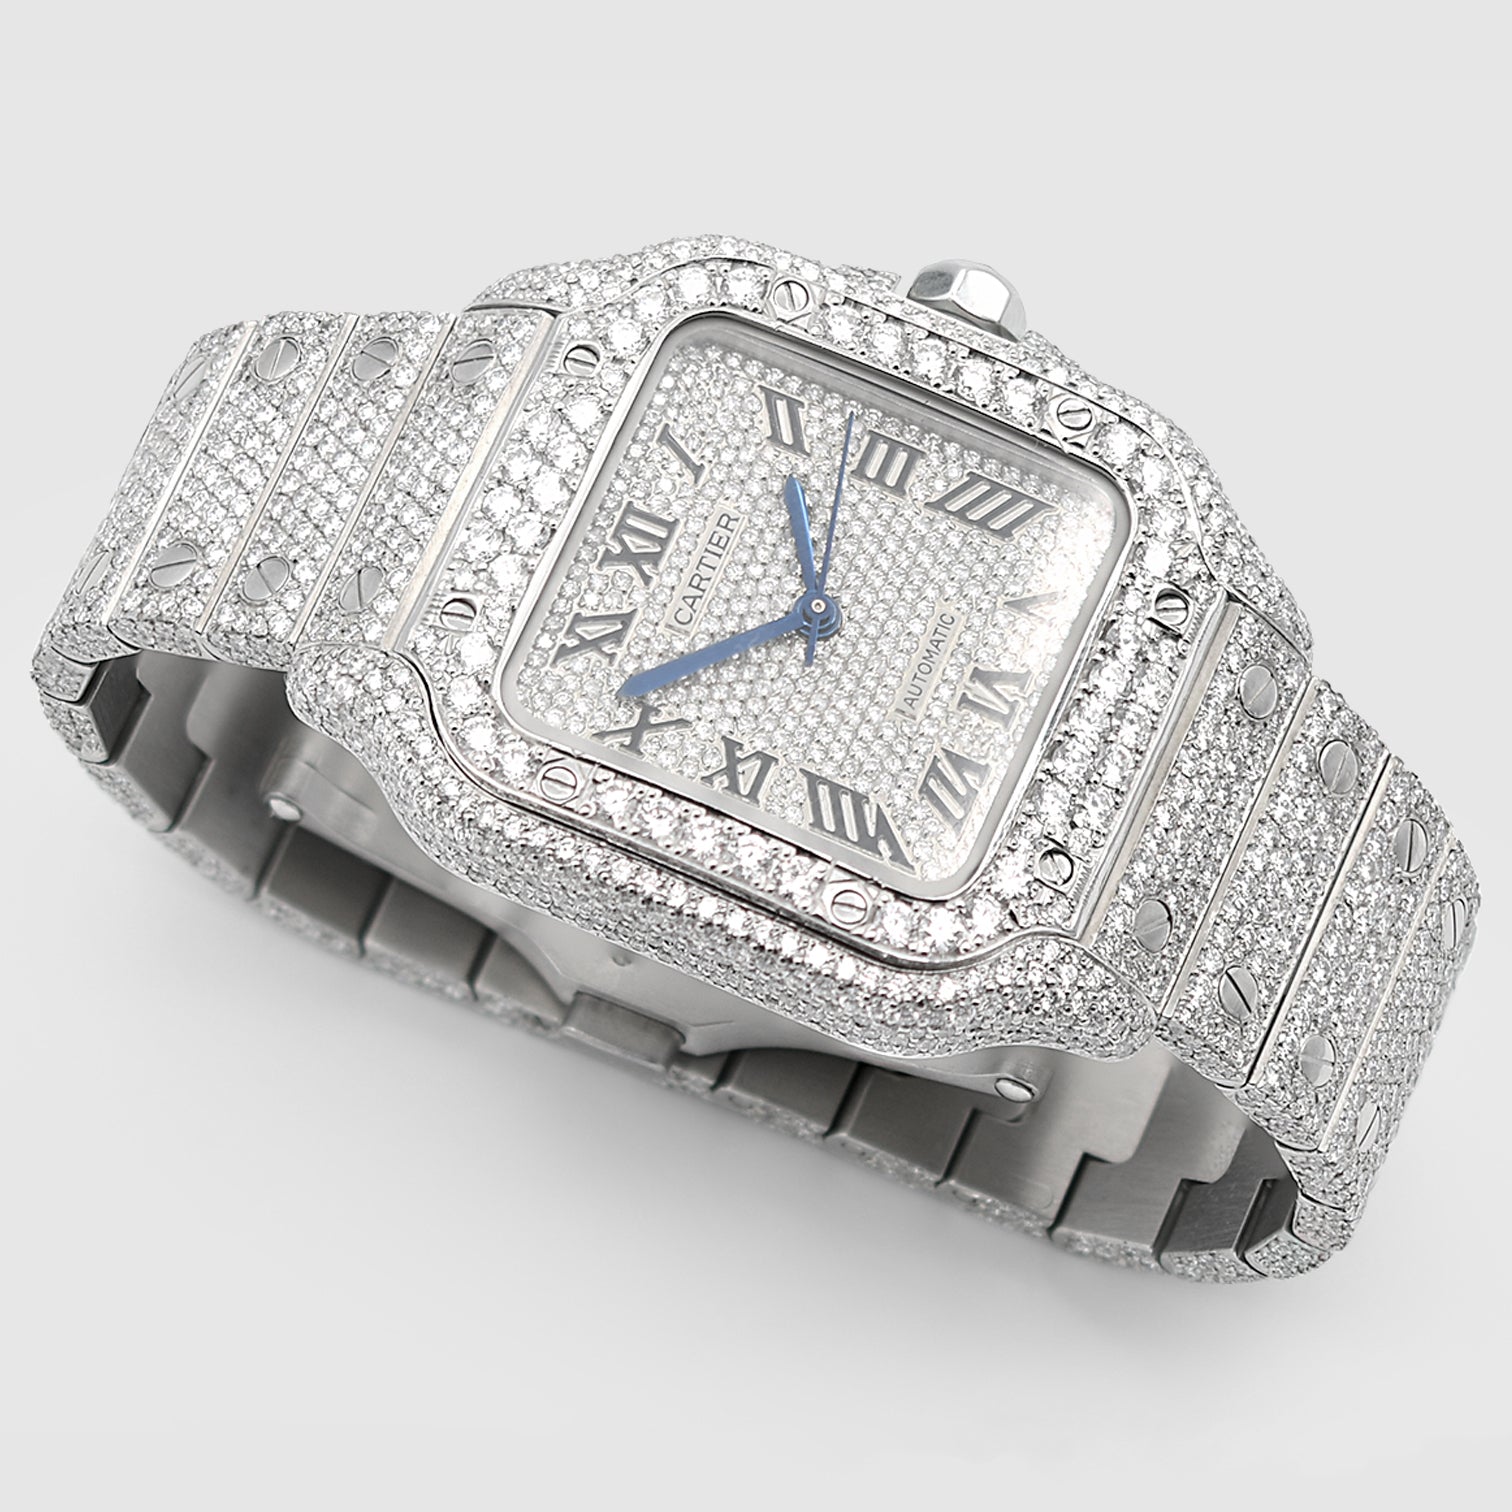 Bulgari - B.zero1 Quartz 22mm - Stainless Steel - Medium Length Clasp –  Watch Brands Direct - Luxury Watches at the Largest Discounts